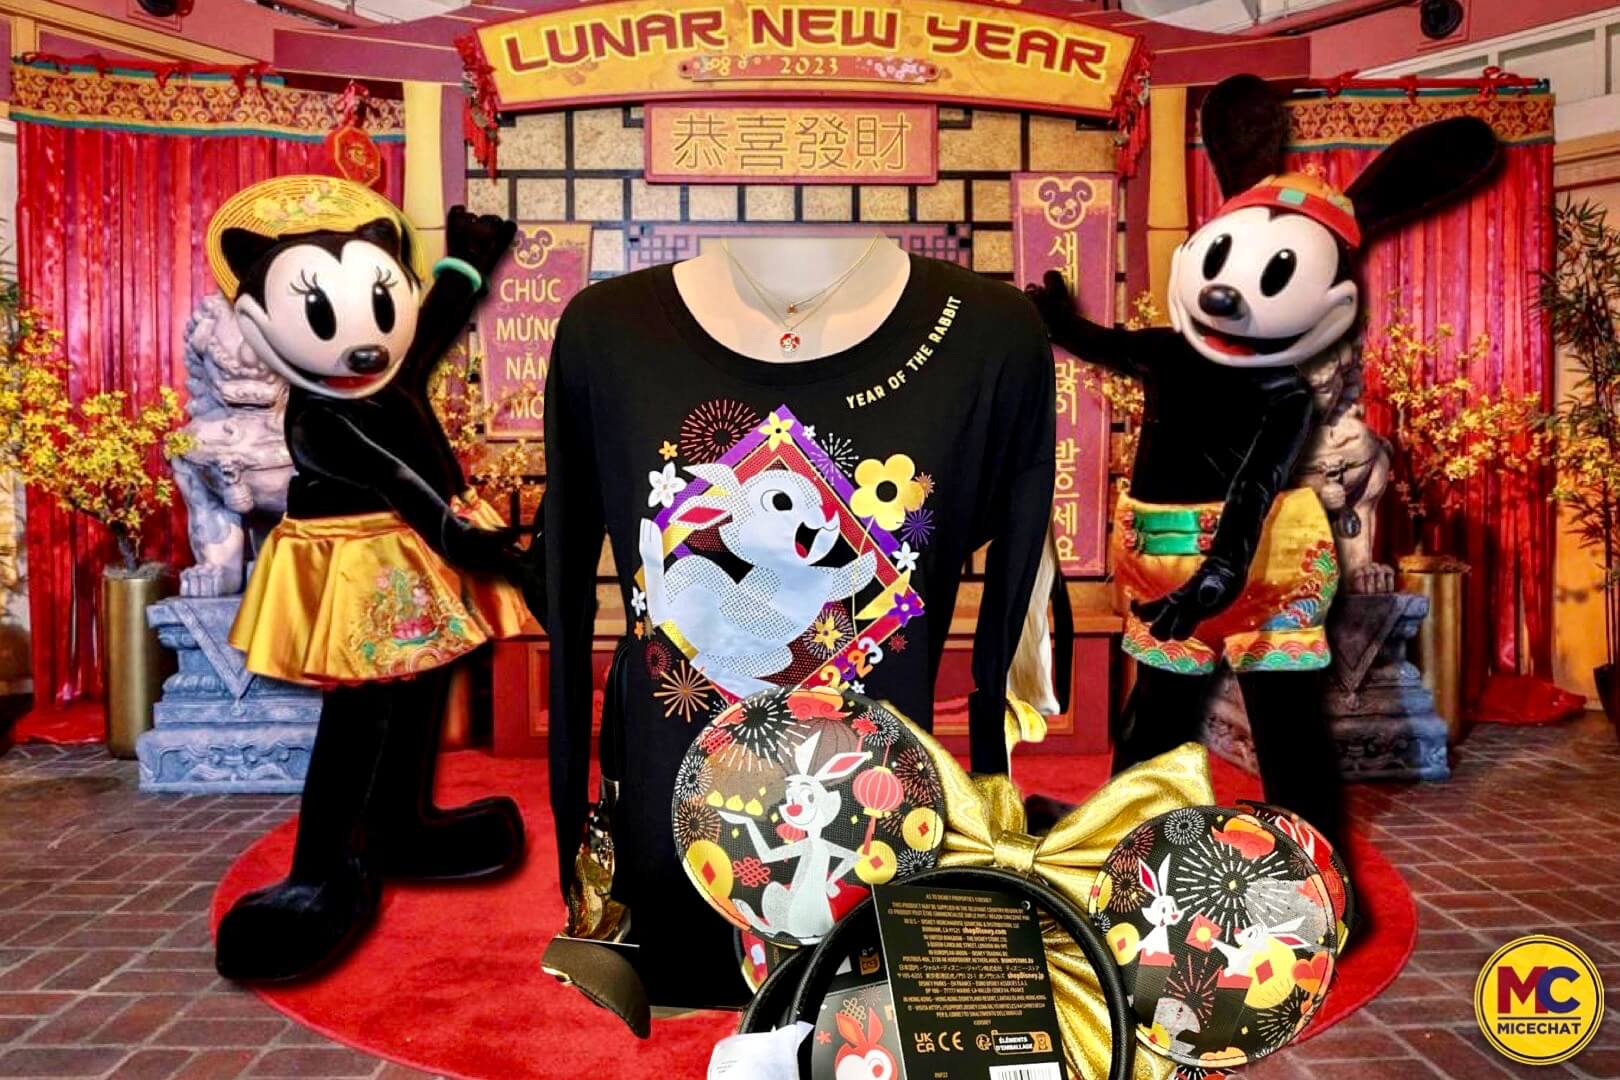 Disneyland Lunar New Year Merchandise Celebrates the Year of the Rabbit!